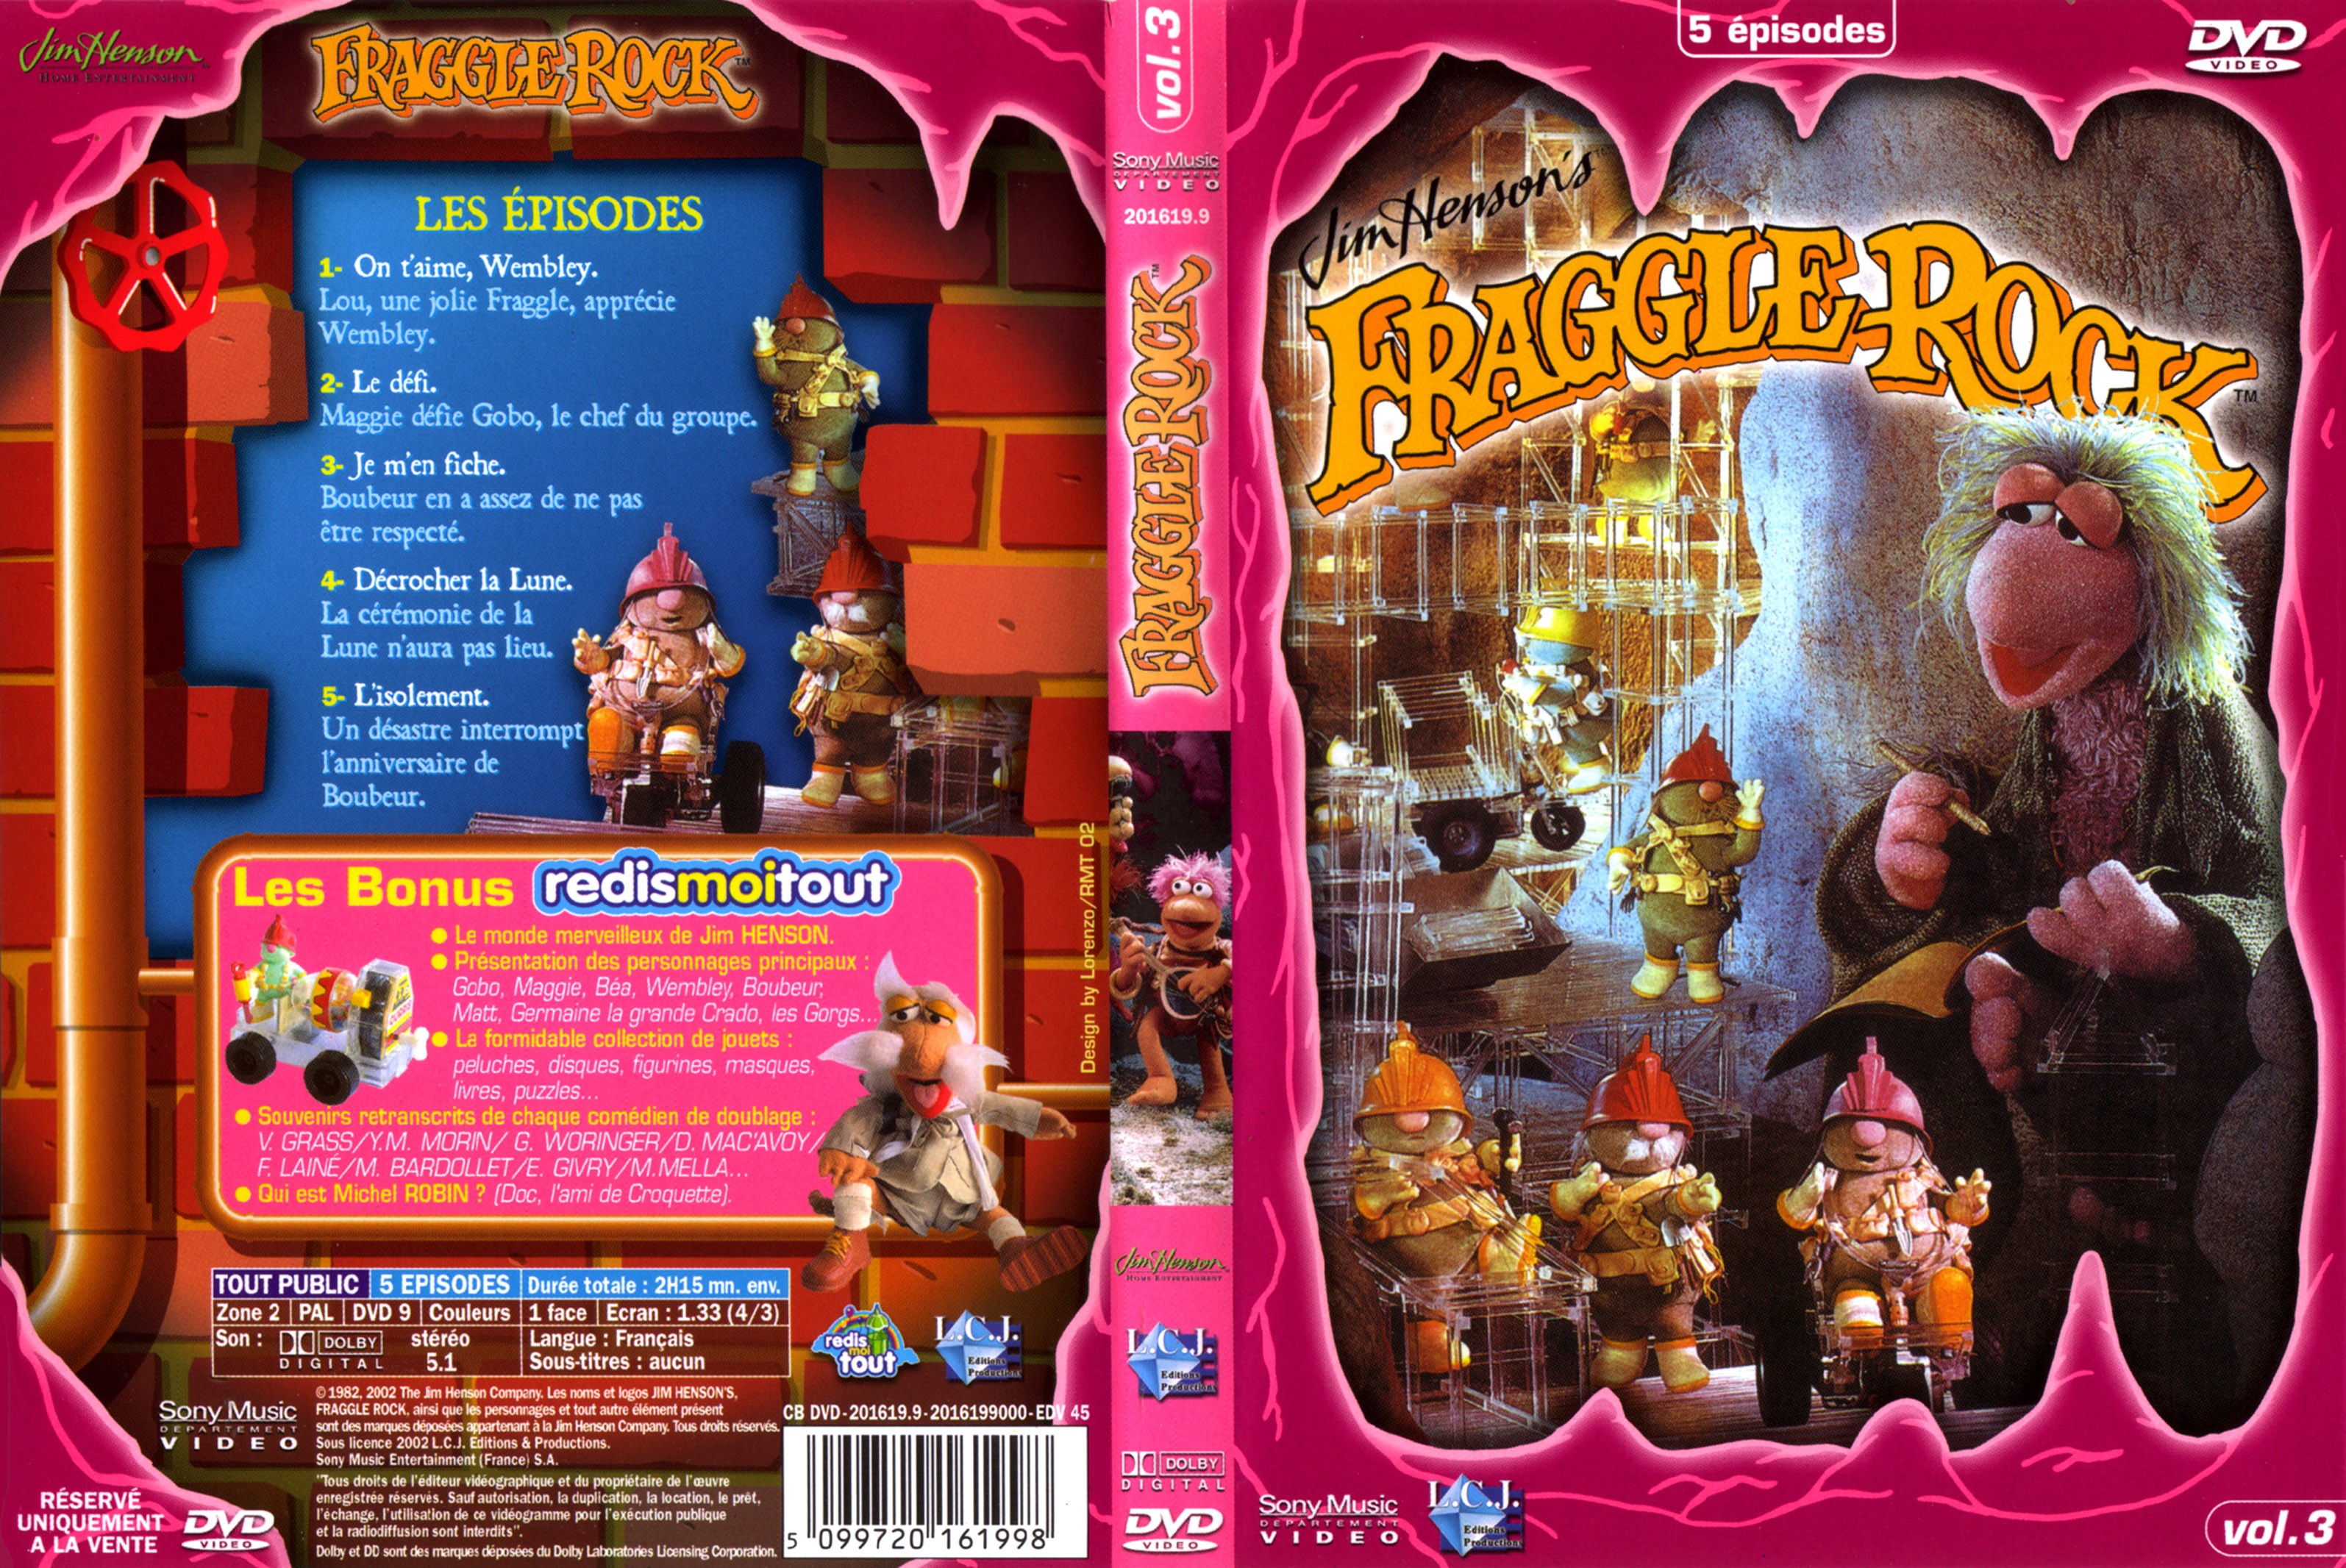 Jaquette DVD Fraggle rock vol 3